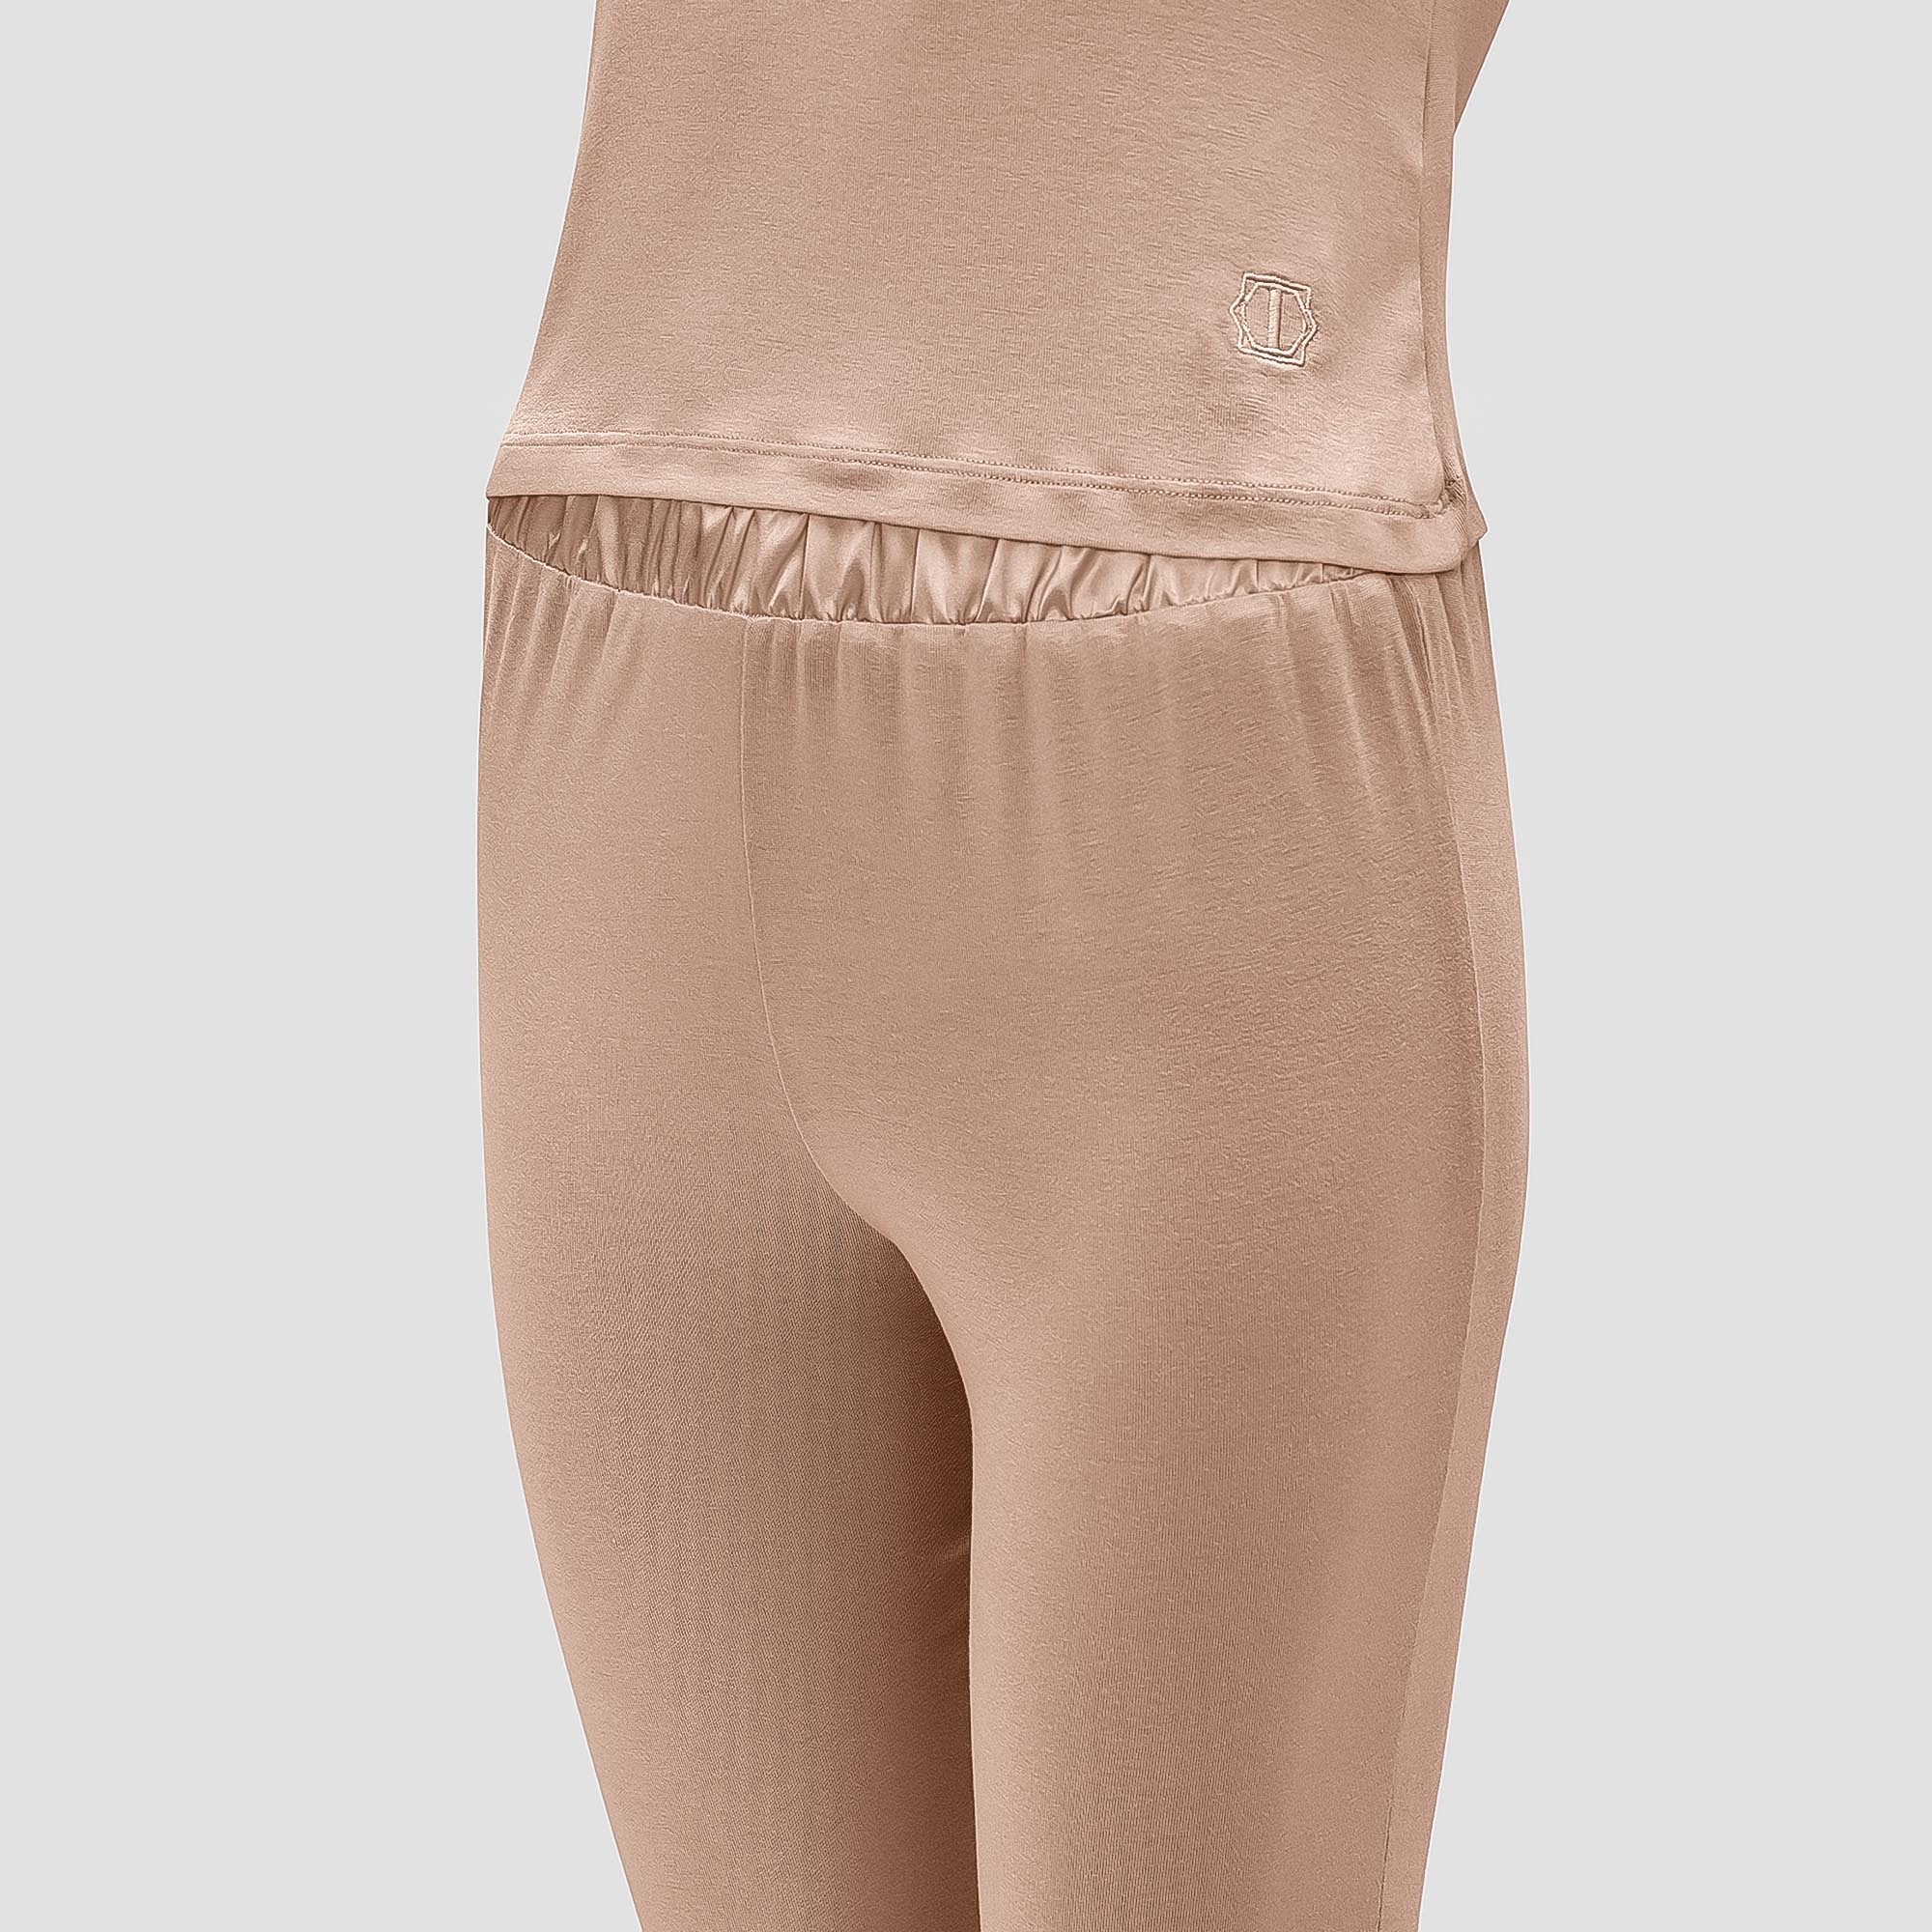 Пижама Togas Ингелла розово-бежевая женская XXL(52) 2 предмета, цвет розовый, размер XXL(52) - фото 2